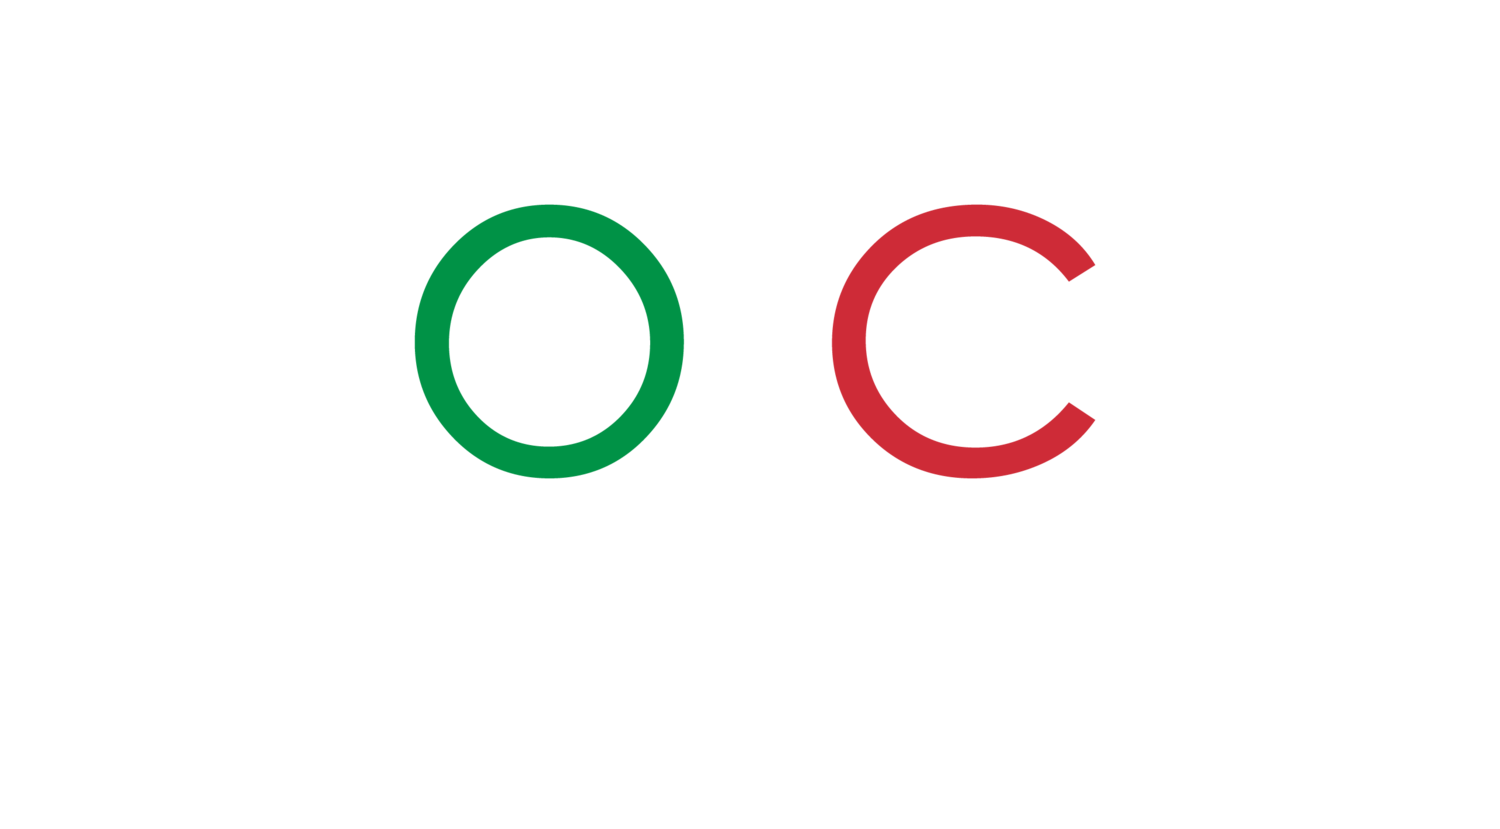 DOLCE HAIR SALON | Lexington KY Hair Salon | Top Balayage Ombre Hair Colorist | Classy Haircuts Blow Dry Styles